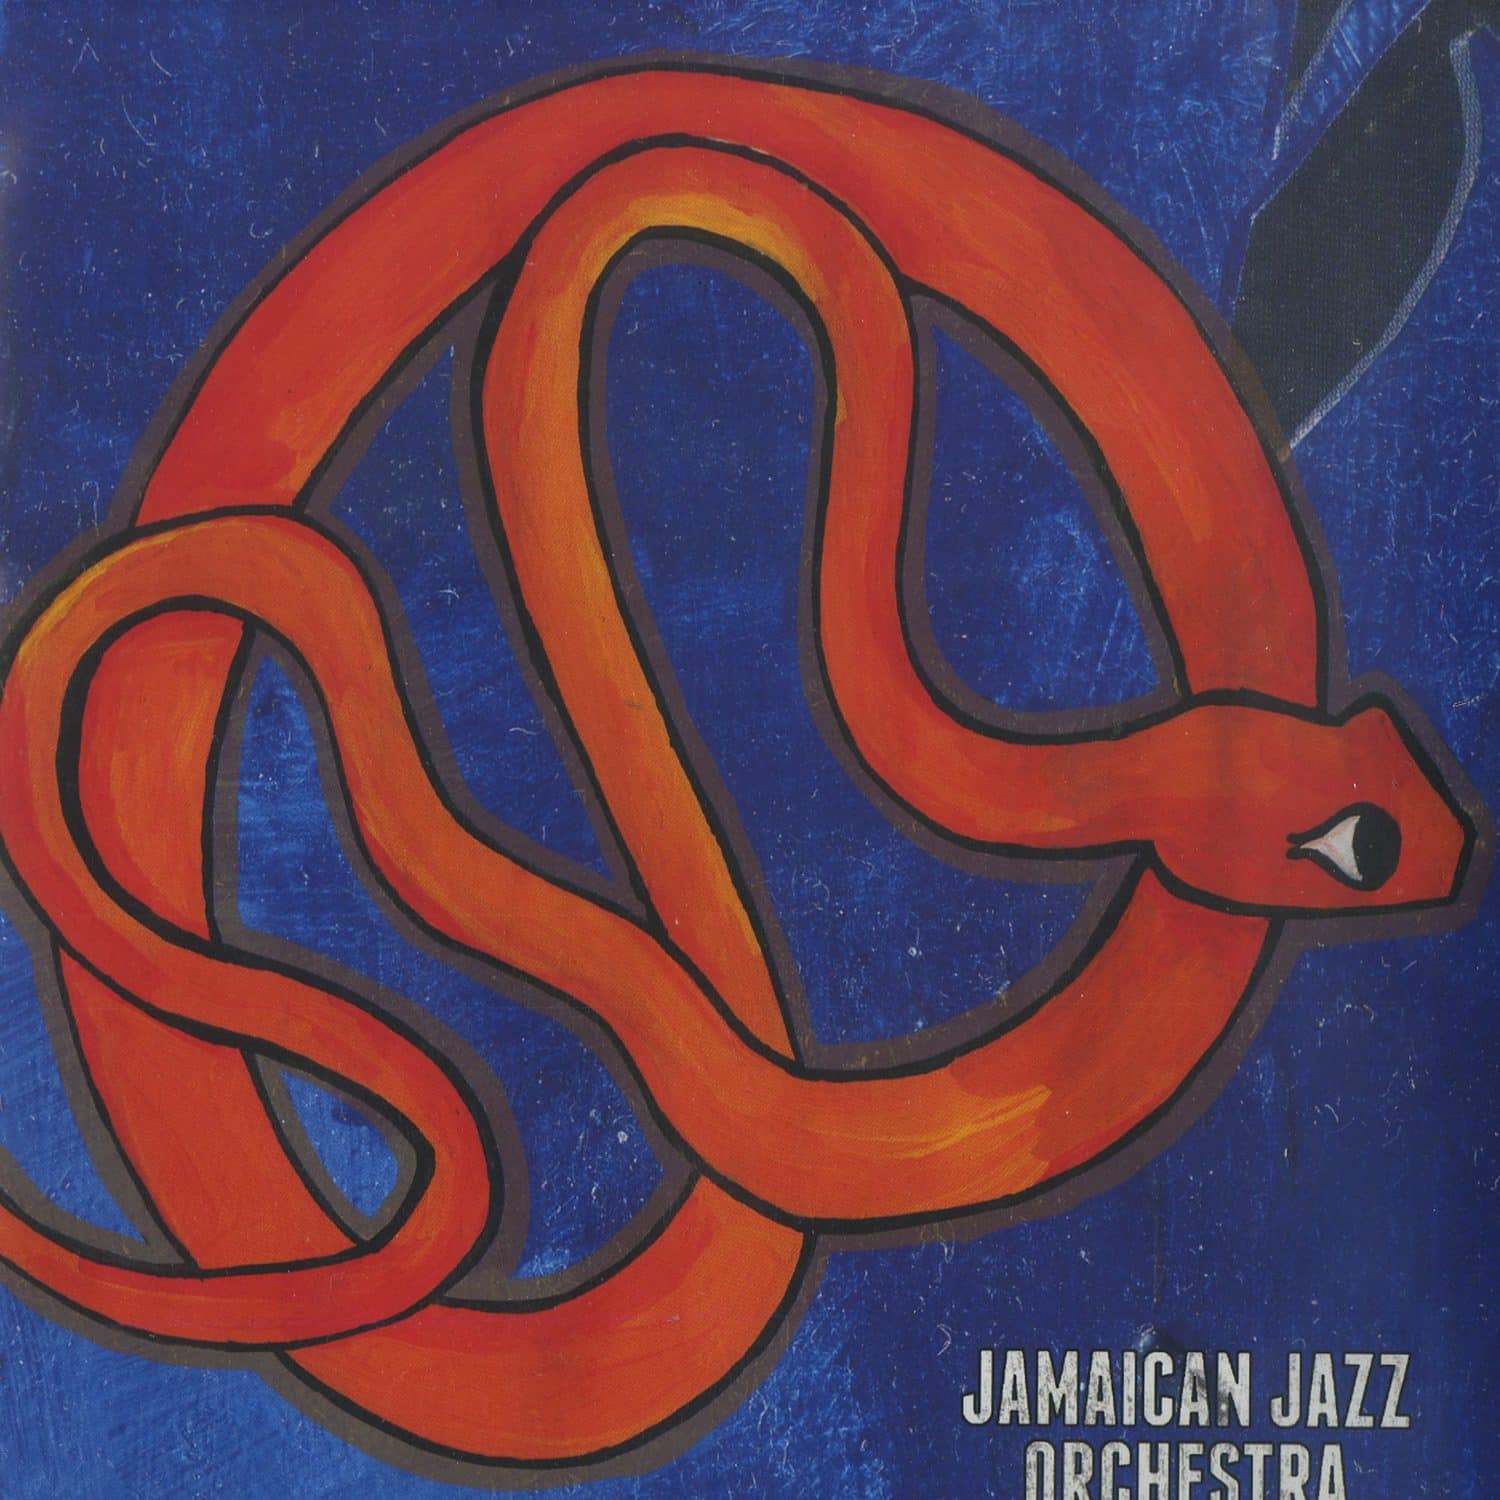 Jamaican Jazz Orchestra - AH BEH BAH / BIG BELLY BLUES 